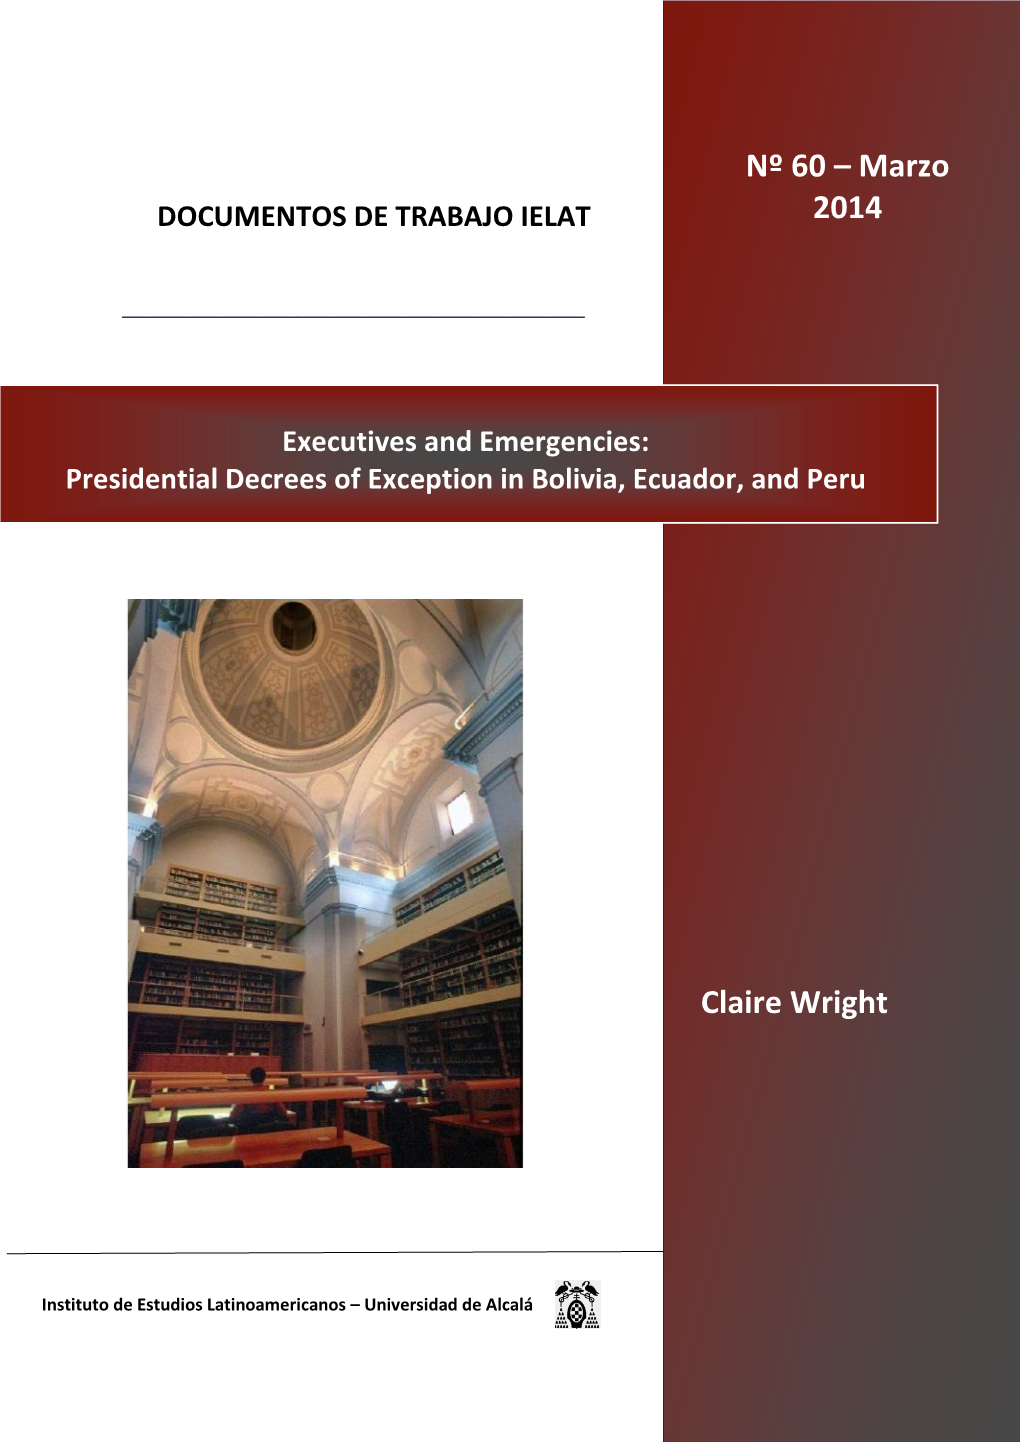 Executives and Emergencies: Presidential Decrees of Exception in Bolivia, Ecuador, and Peru